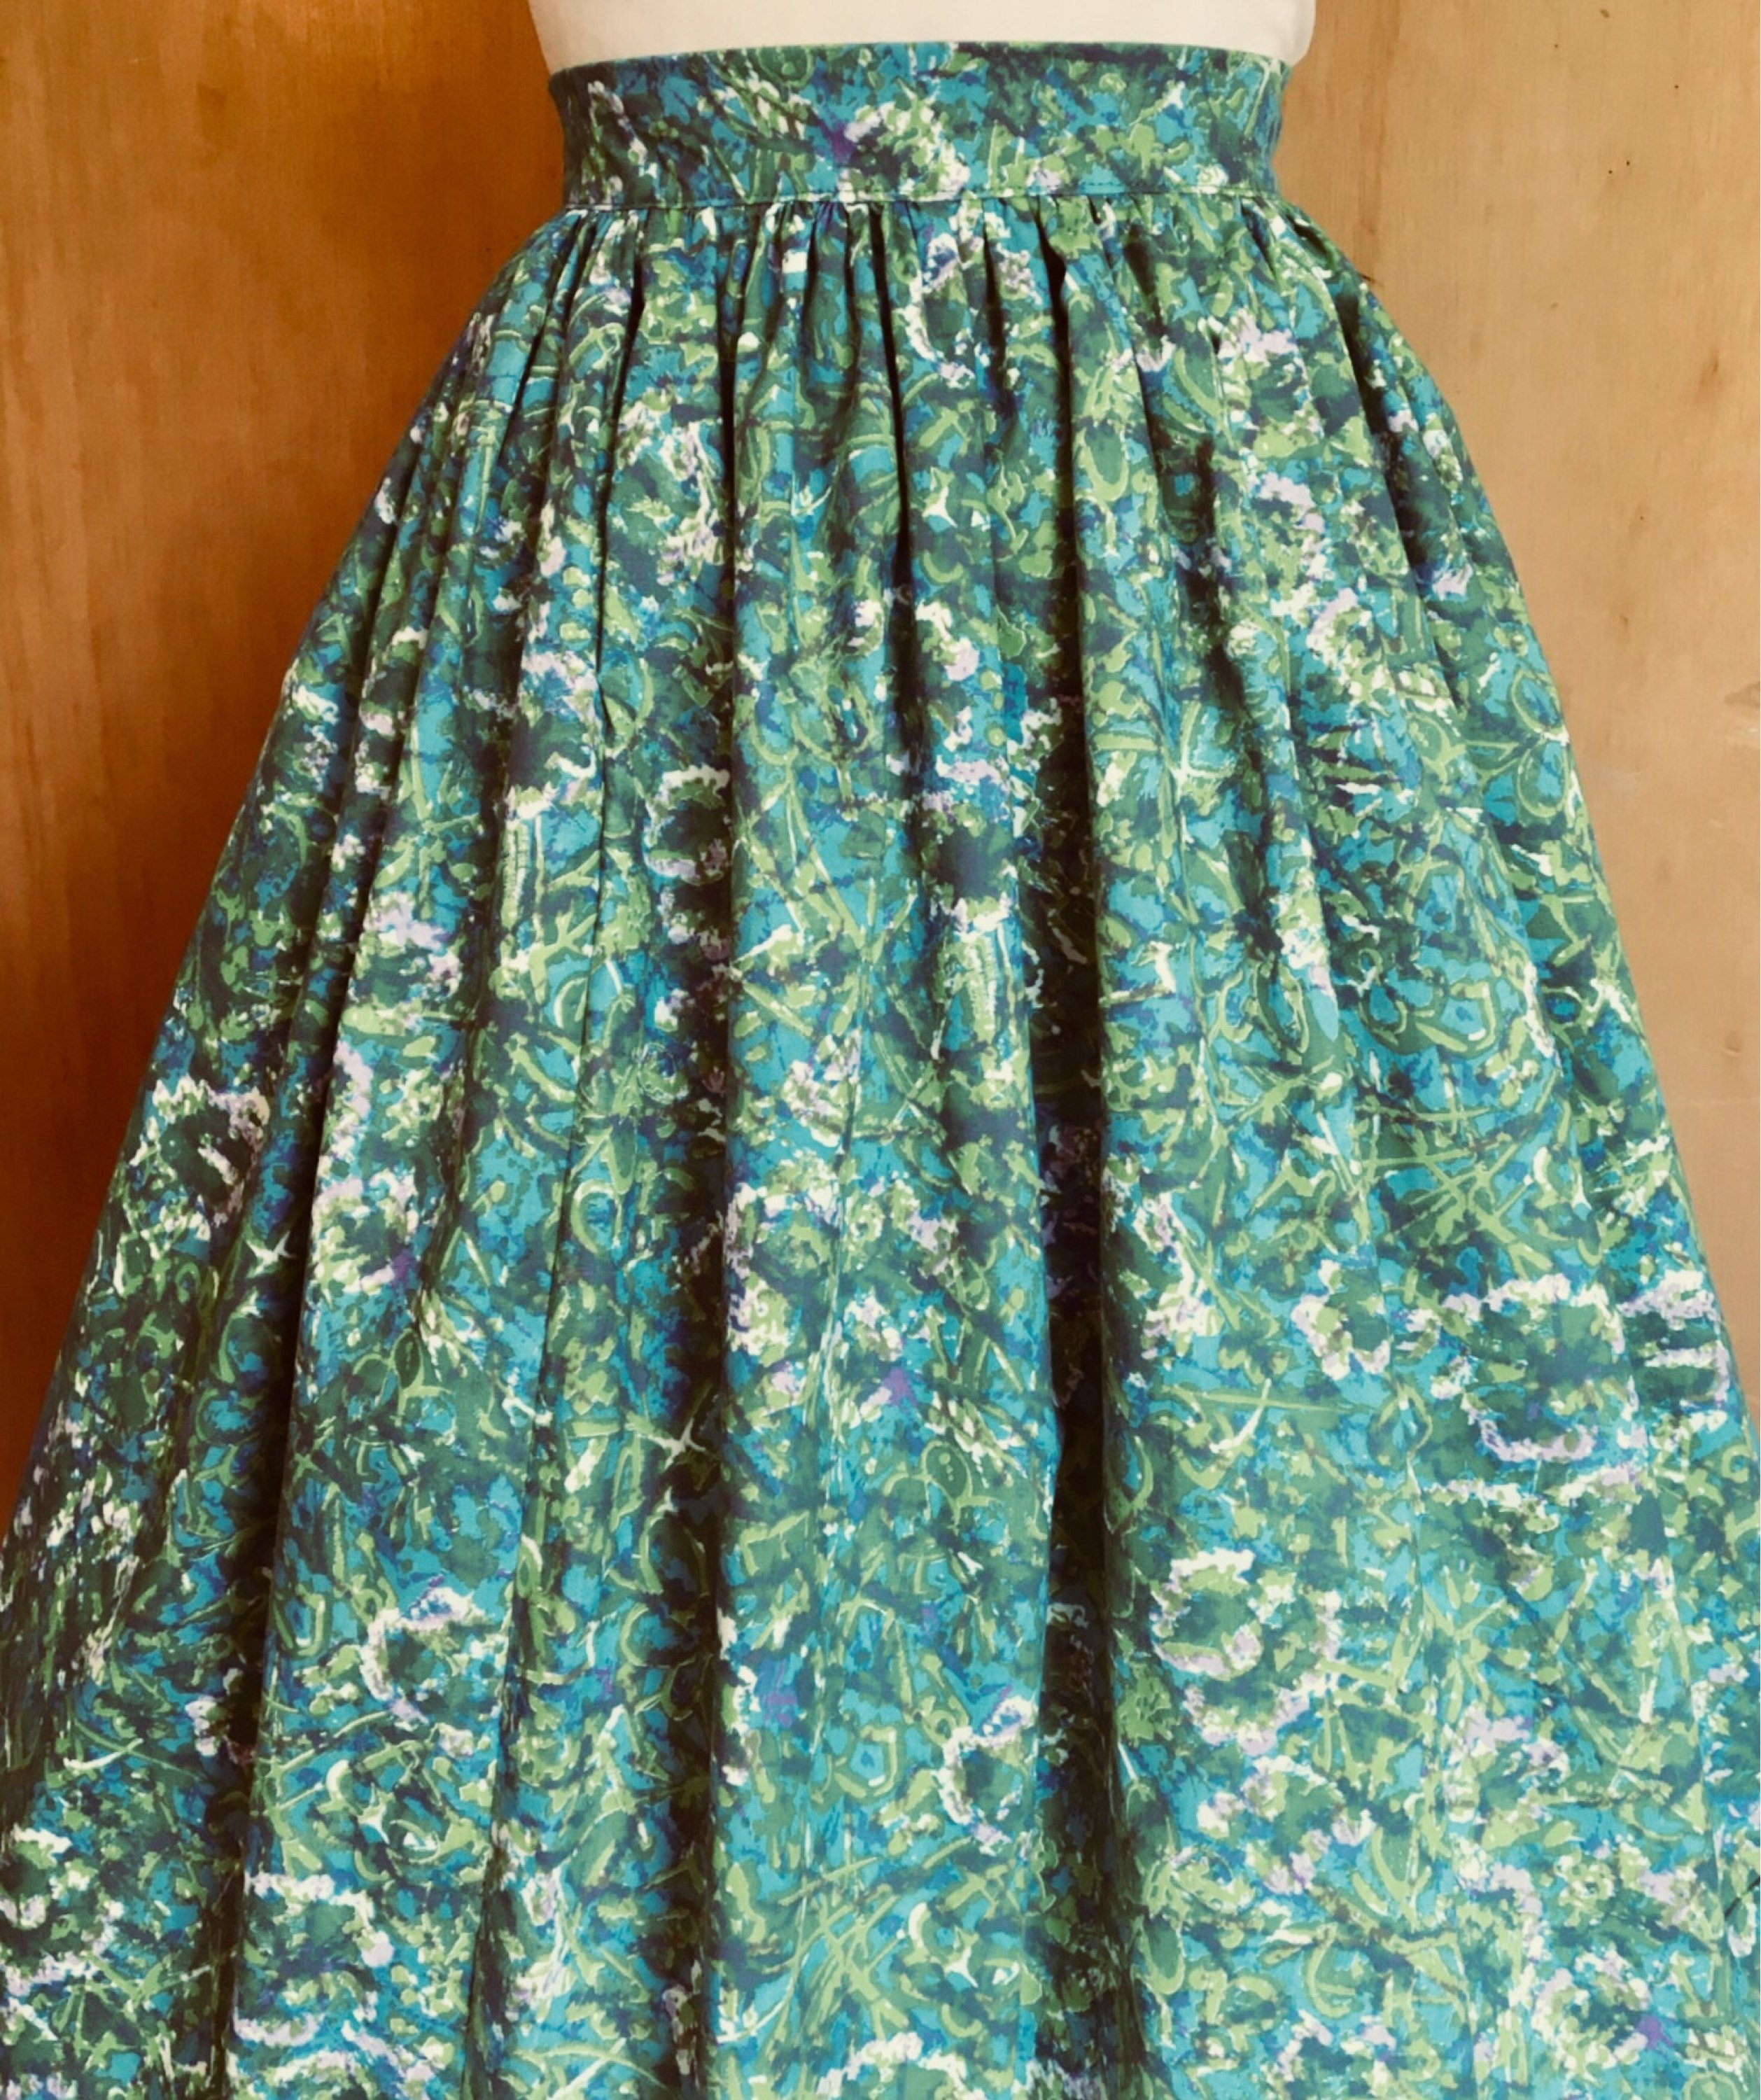 Full dirndl skirt made from vintage 1950s green blue floral | Etsy